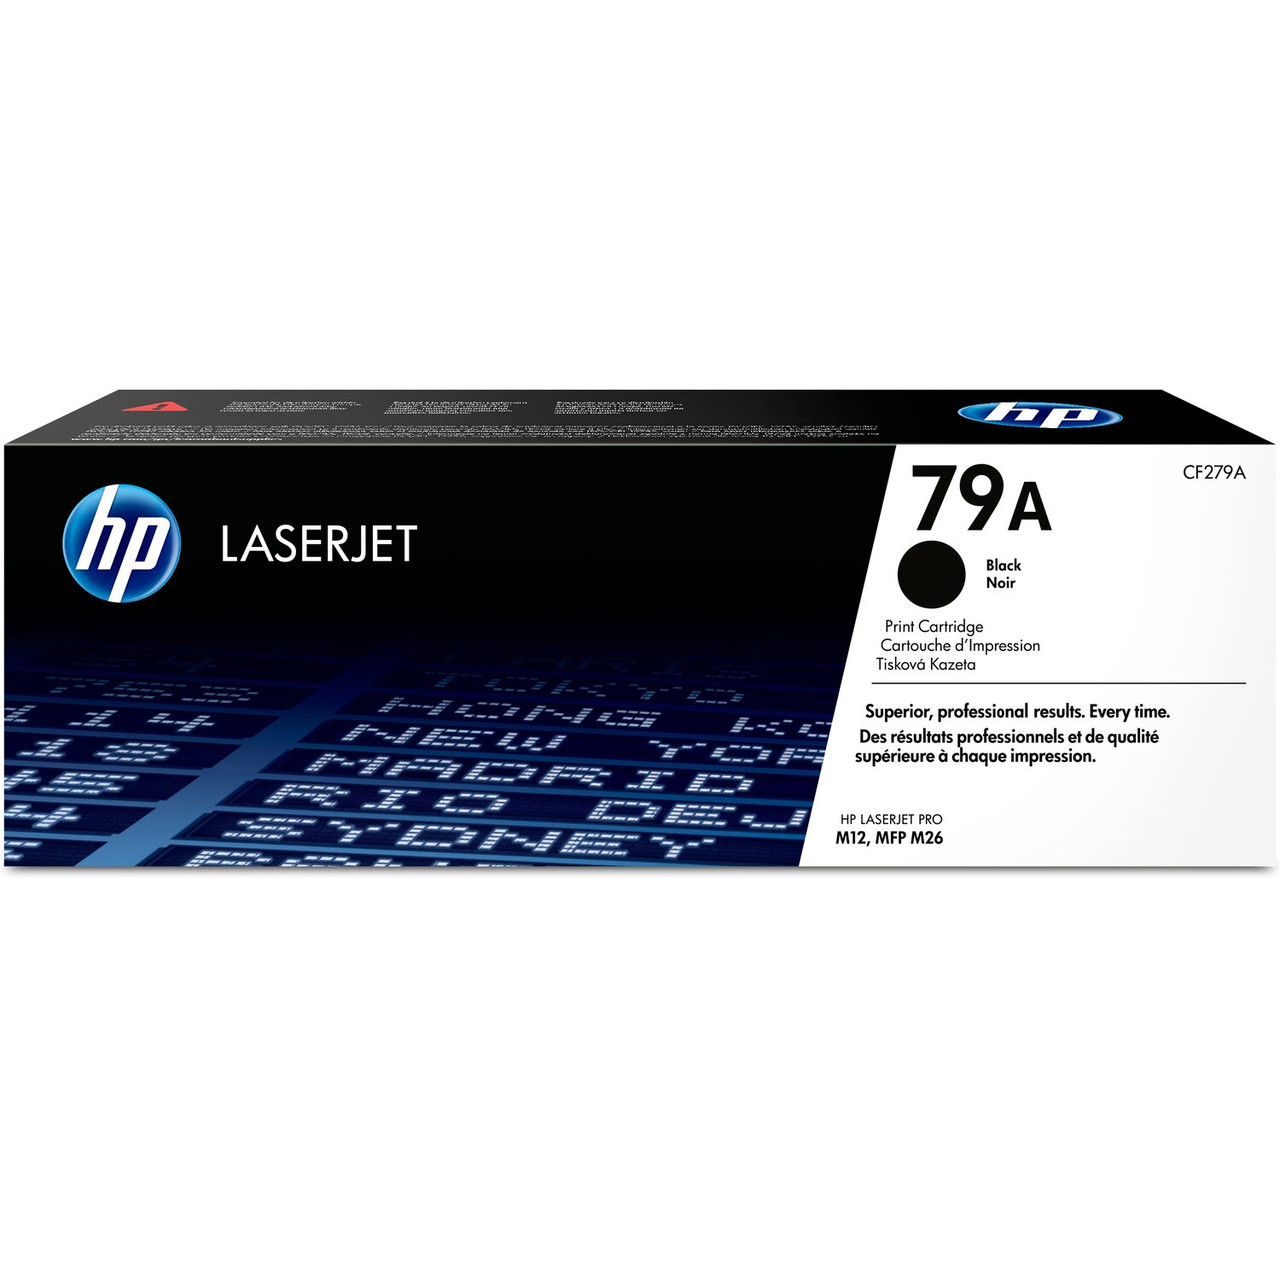 HP LaserJet 79A Black Print Cartridge - EMEA use only